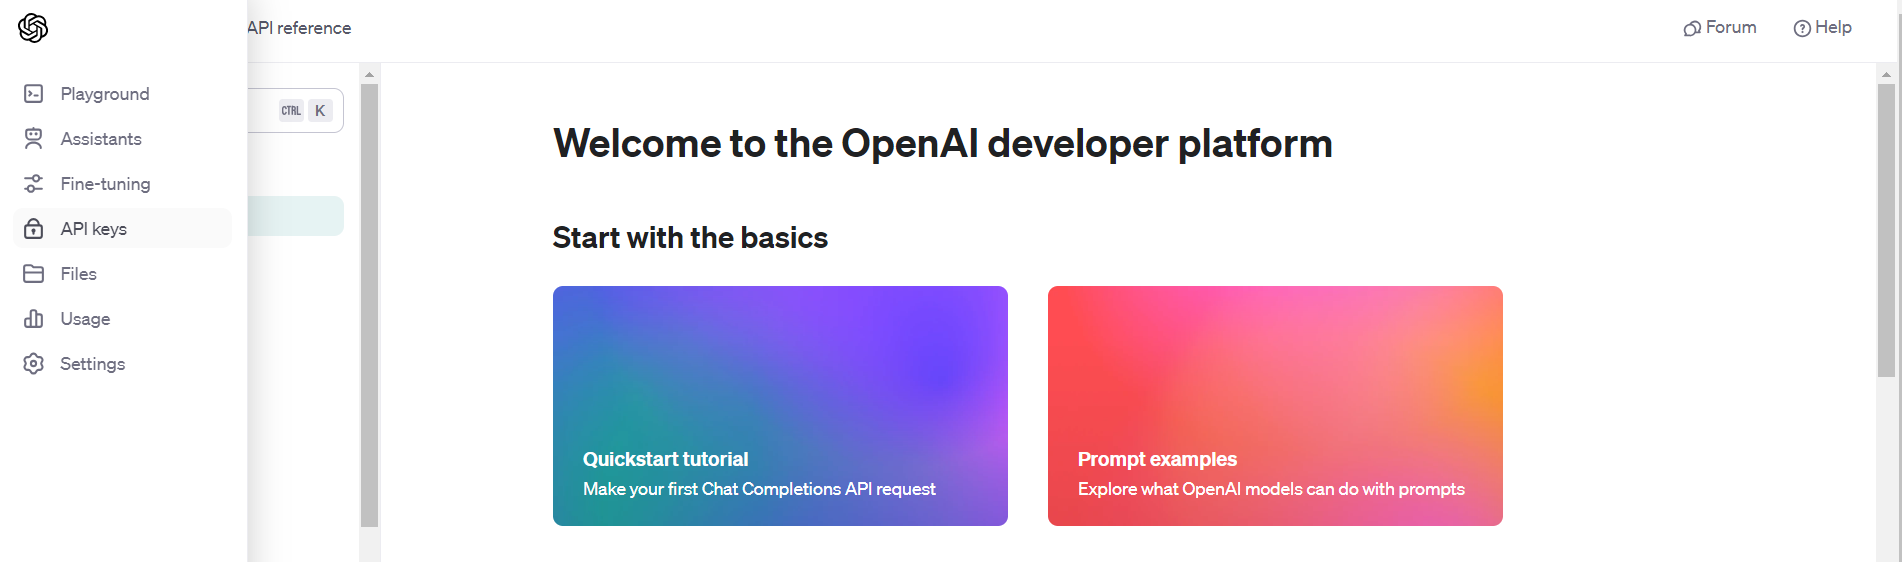 Open AI platform